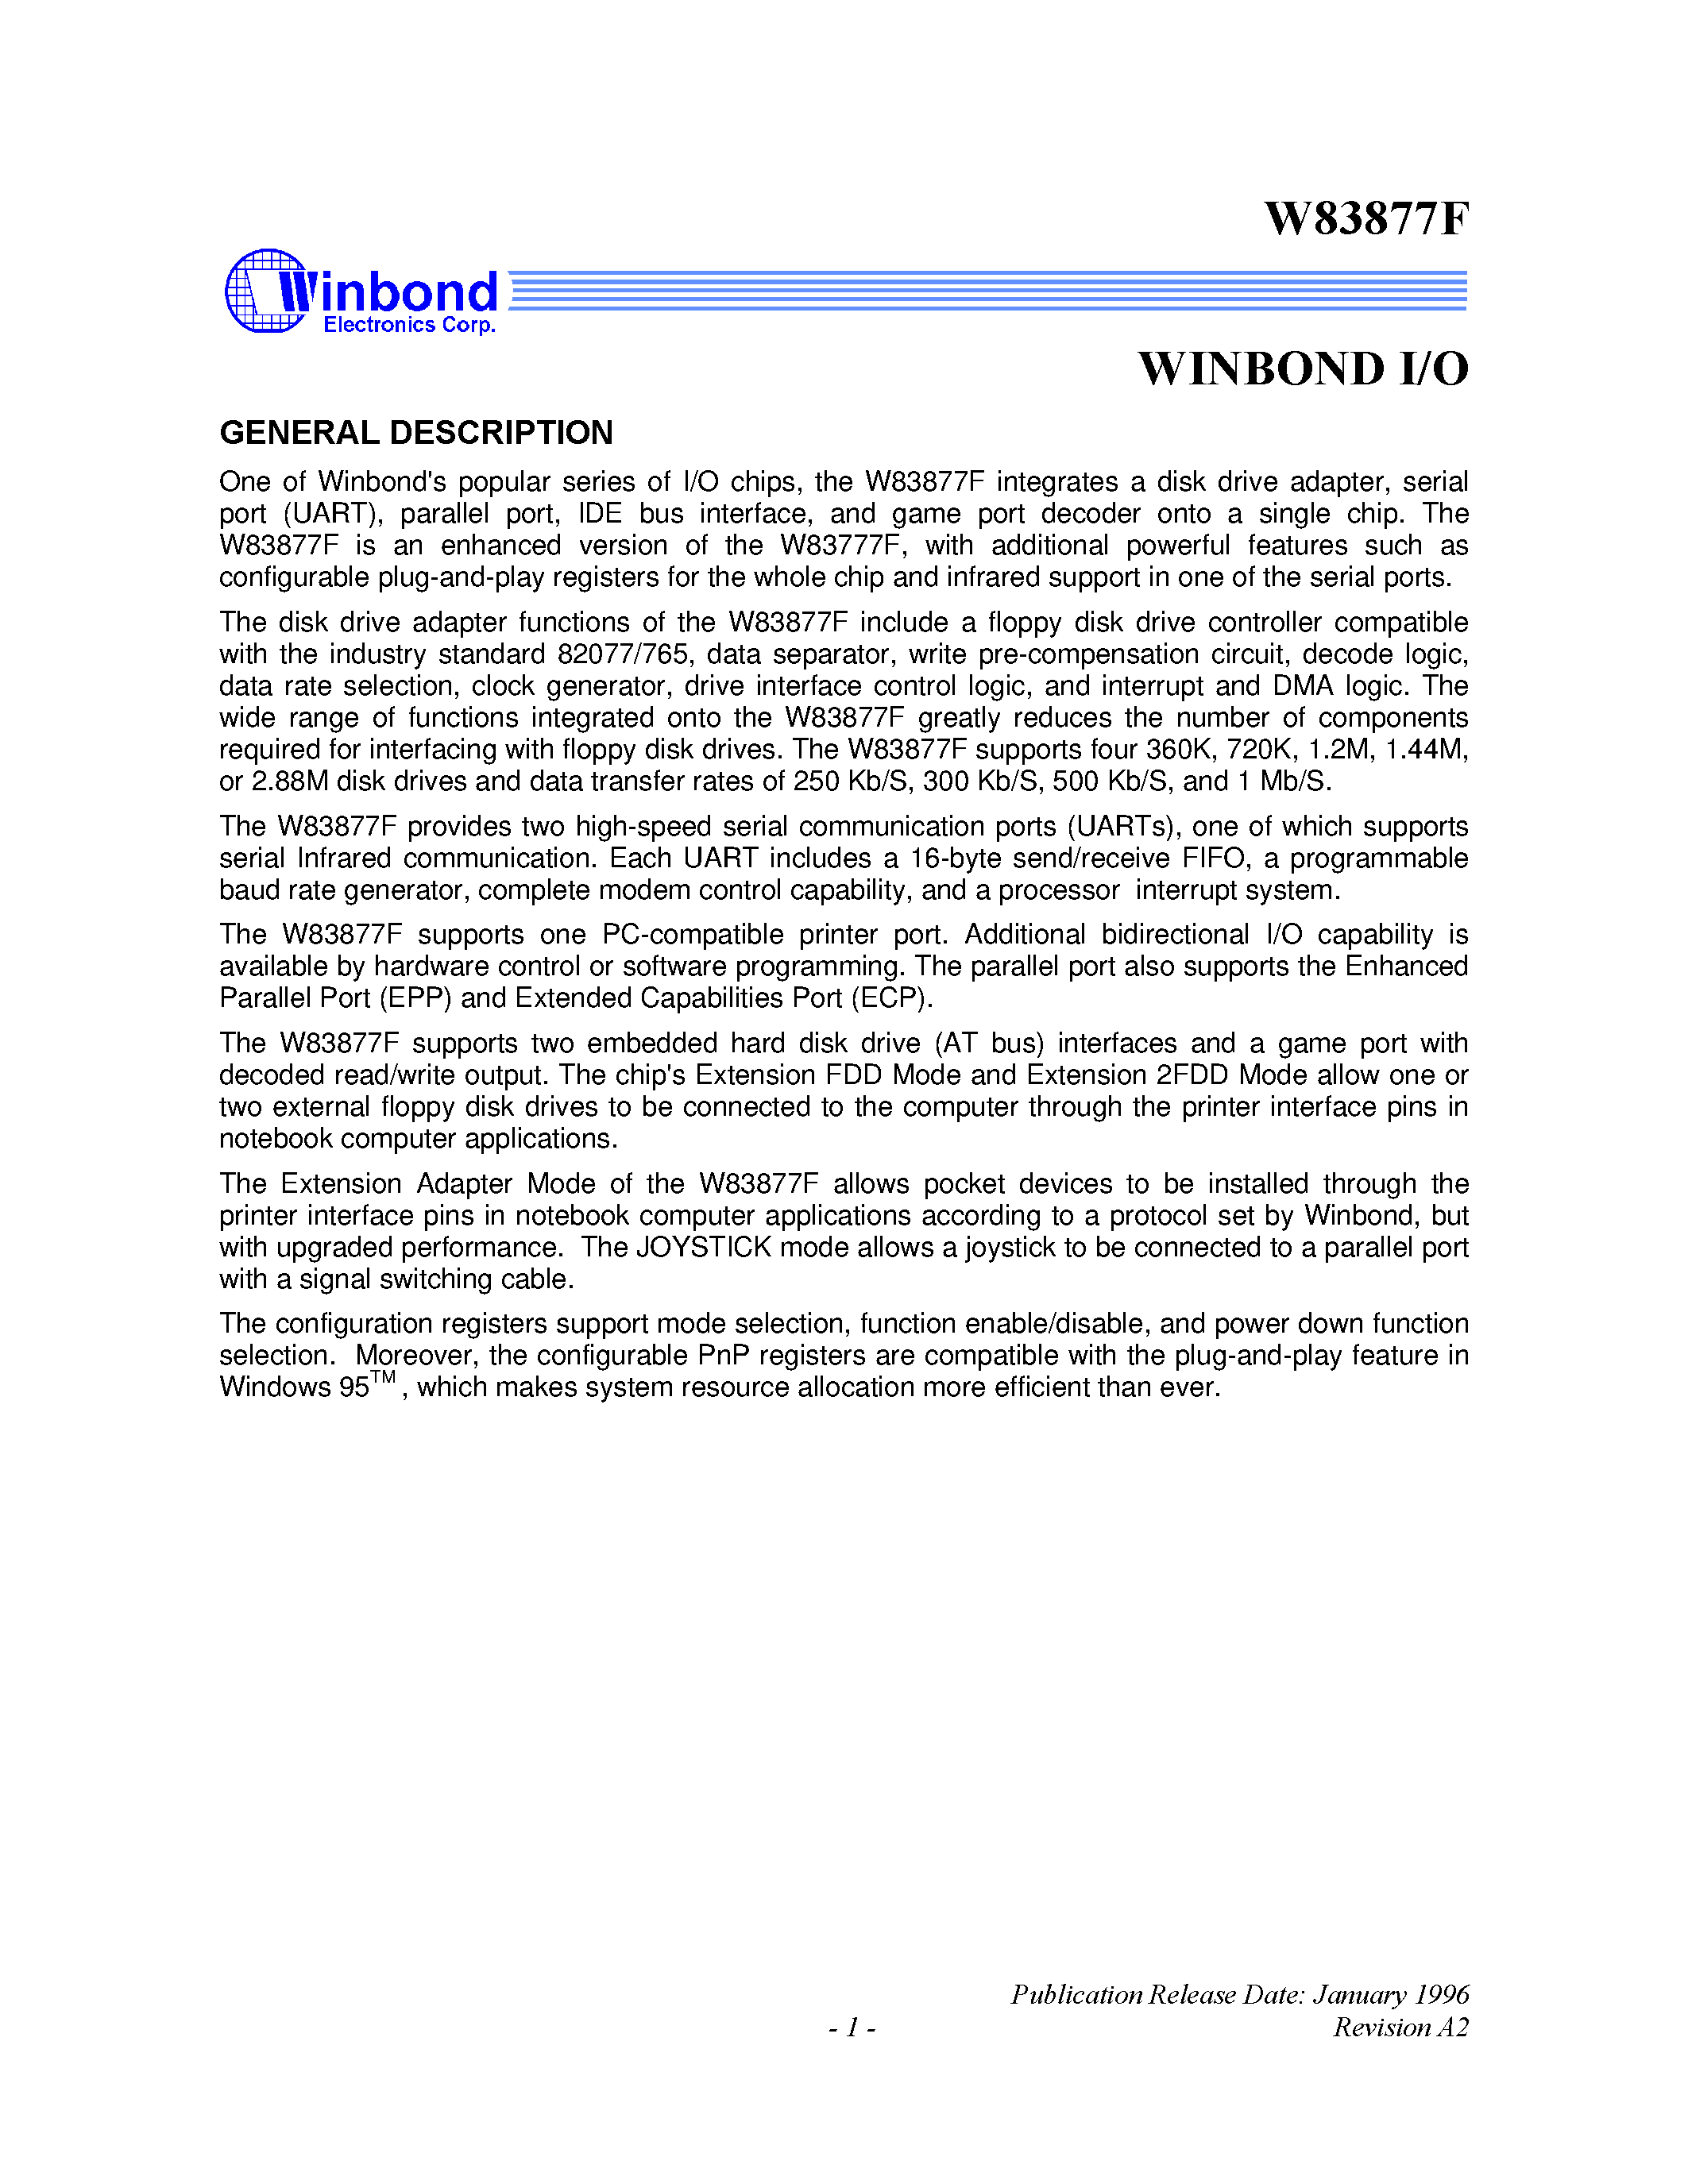 Даташит W83877F - WINBOND I/O страница 1